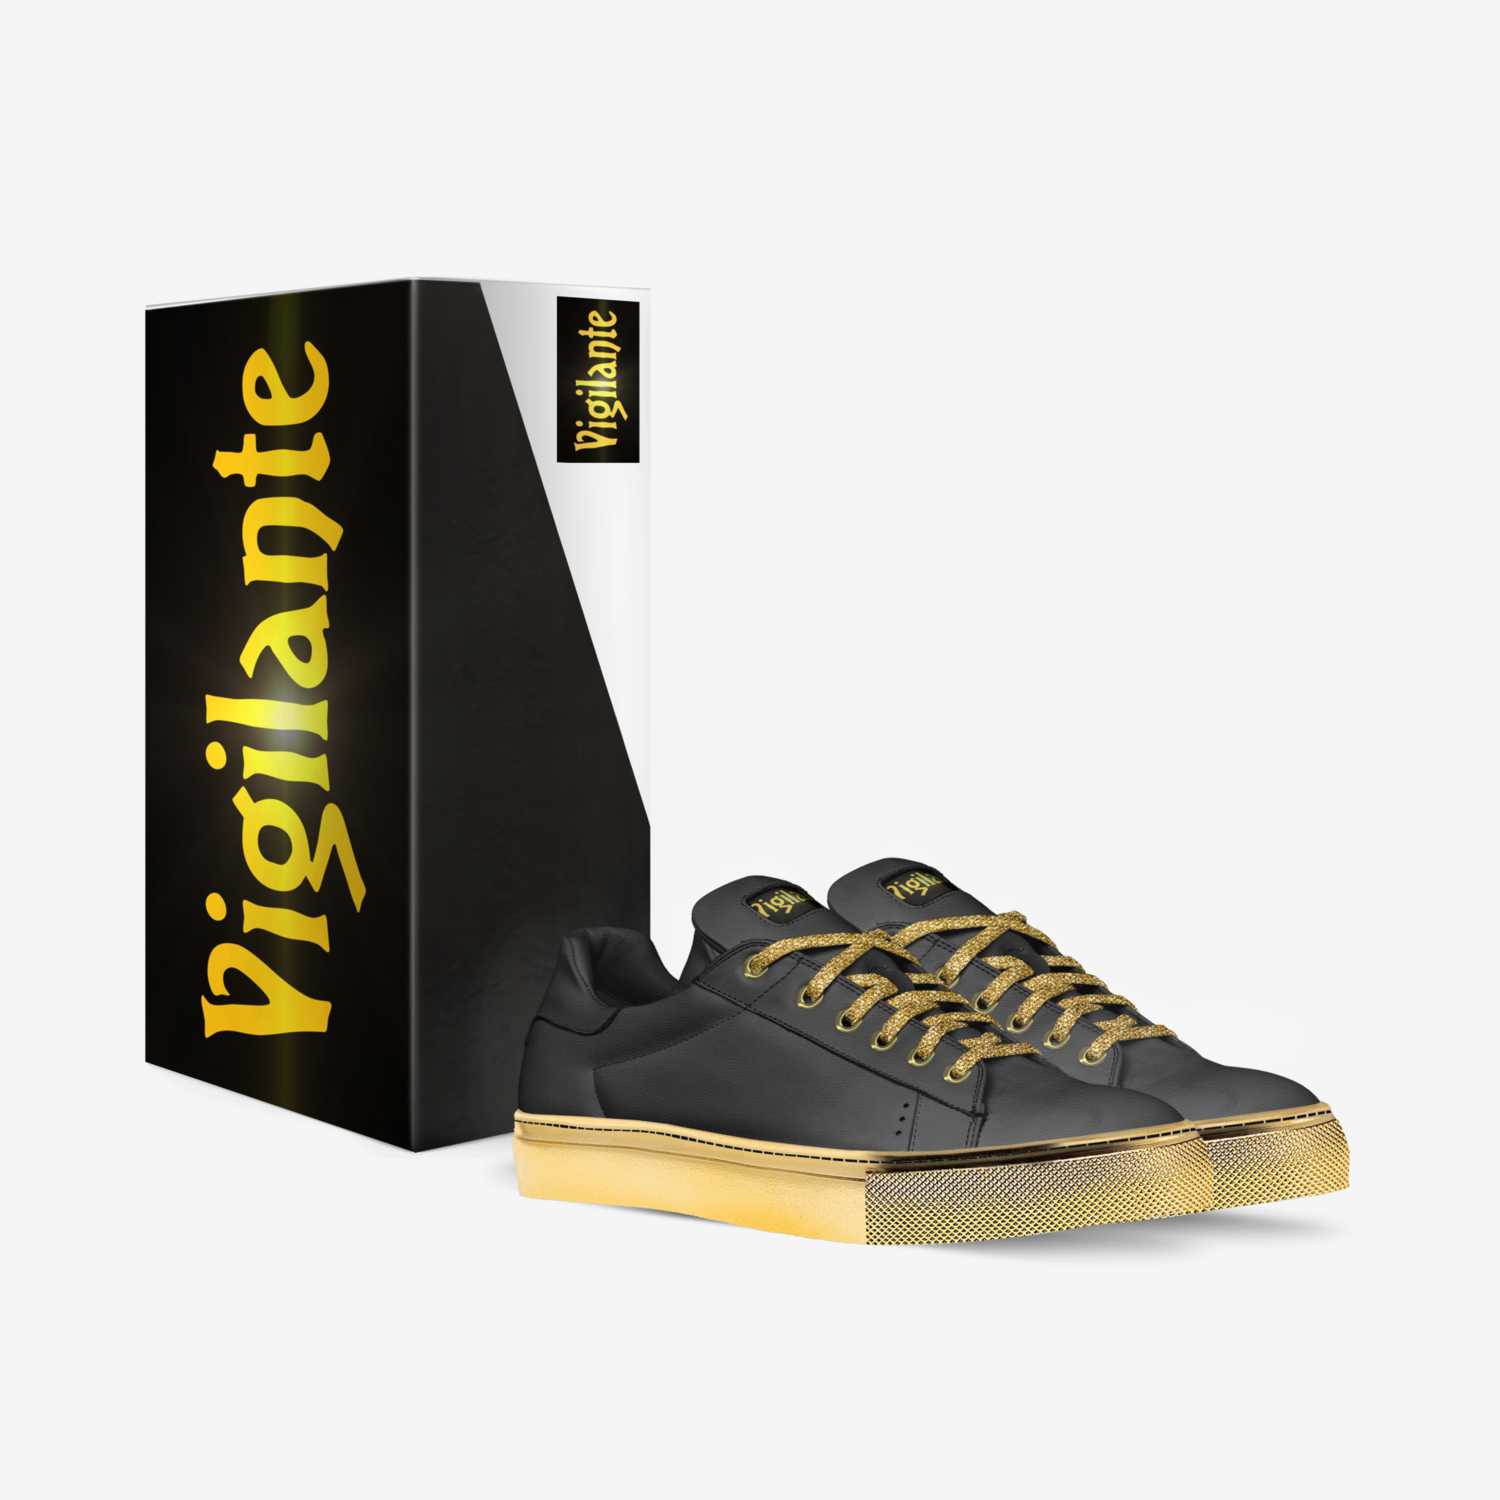 Vigilante 3 custom made in Italy shoes by Ryan Hardaway | Box view